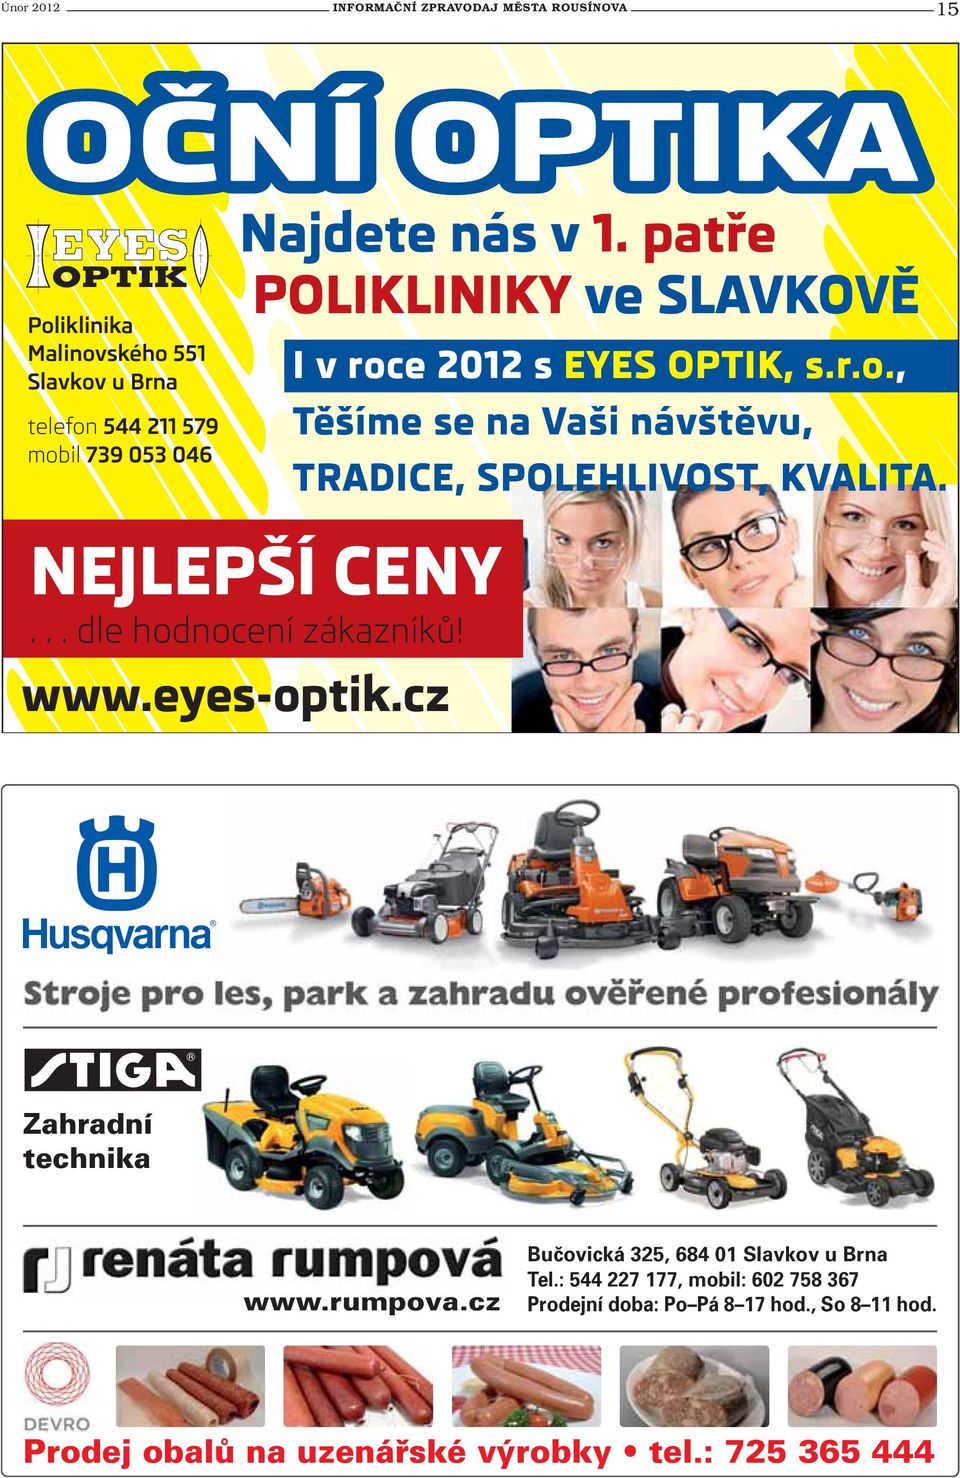 NEJLEPŠÍ CENY...dlehodnocenízákazníků! www.eyes-optik.cz Zahradní technika www.rumpova.cz Bučovická 325, 684 01 Slavkov u Brna Tel.